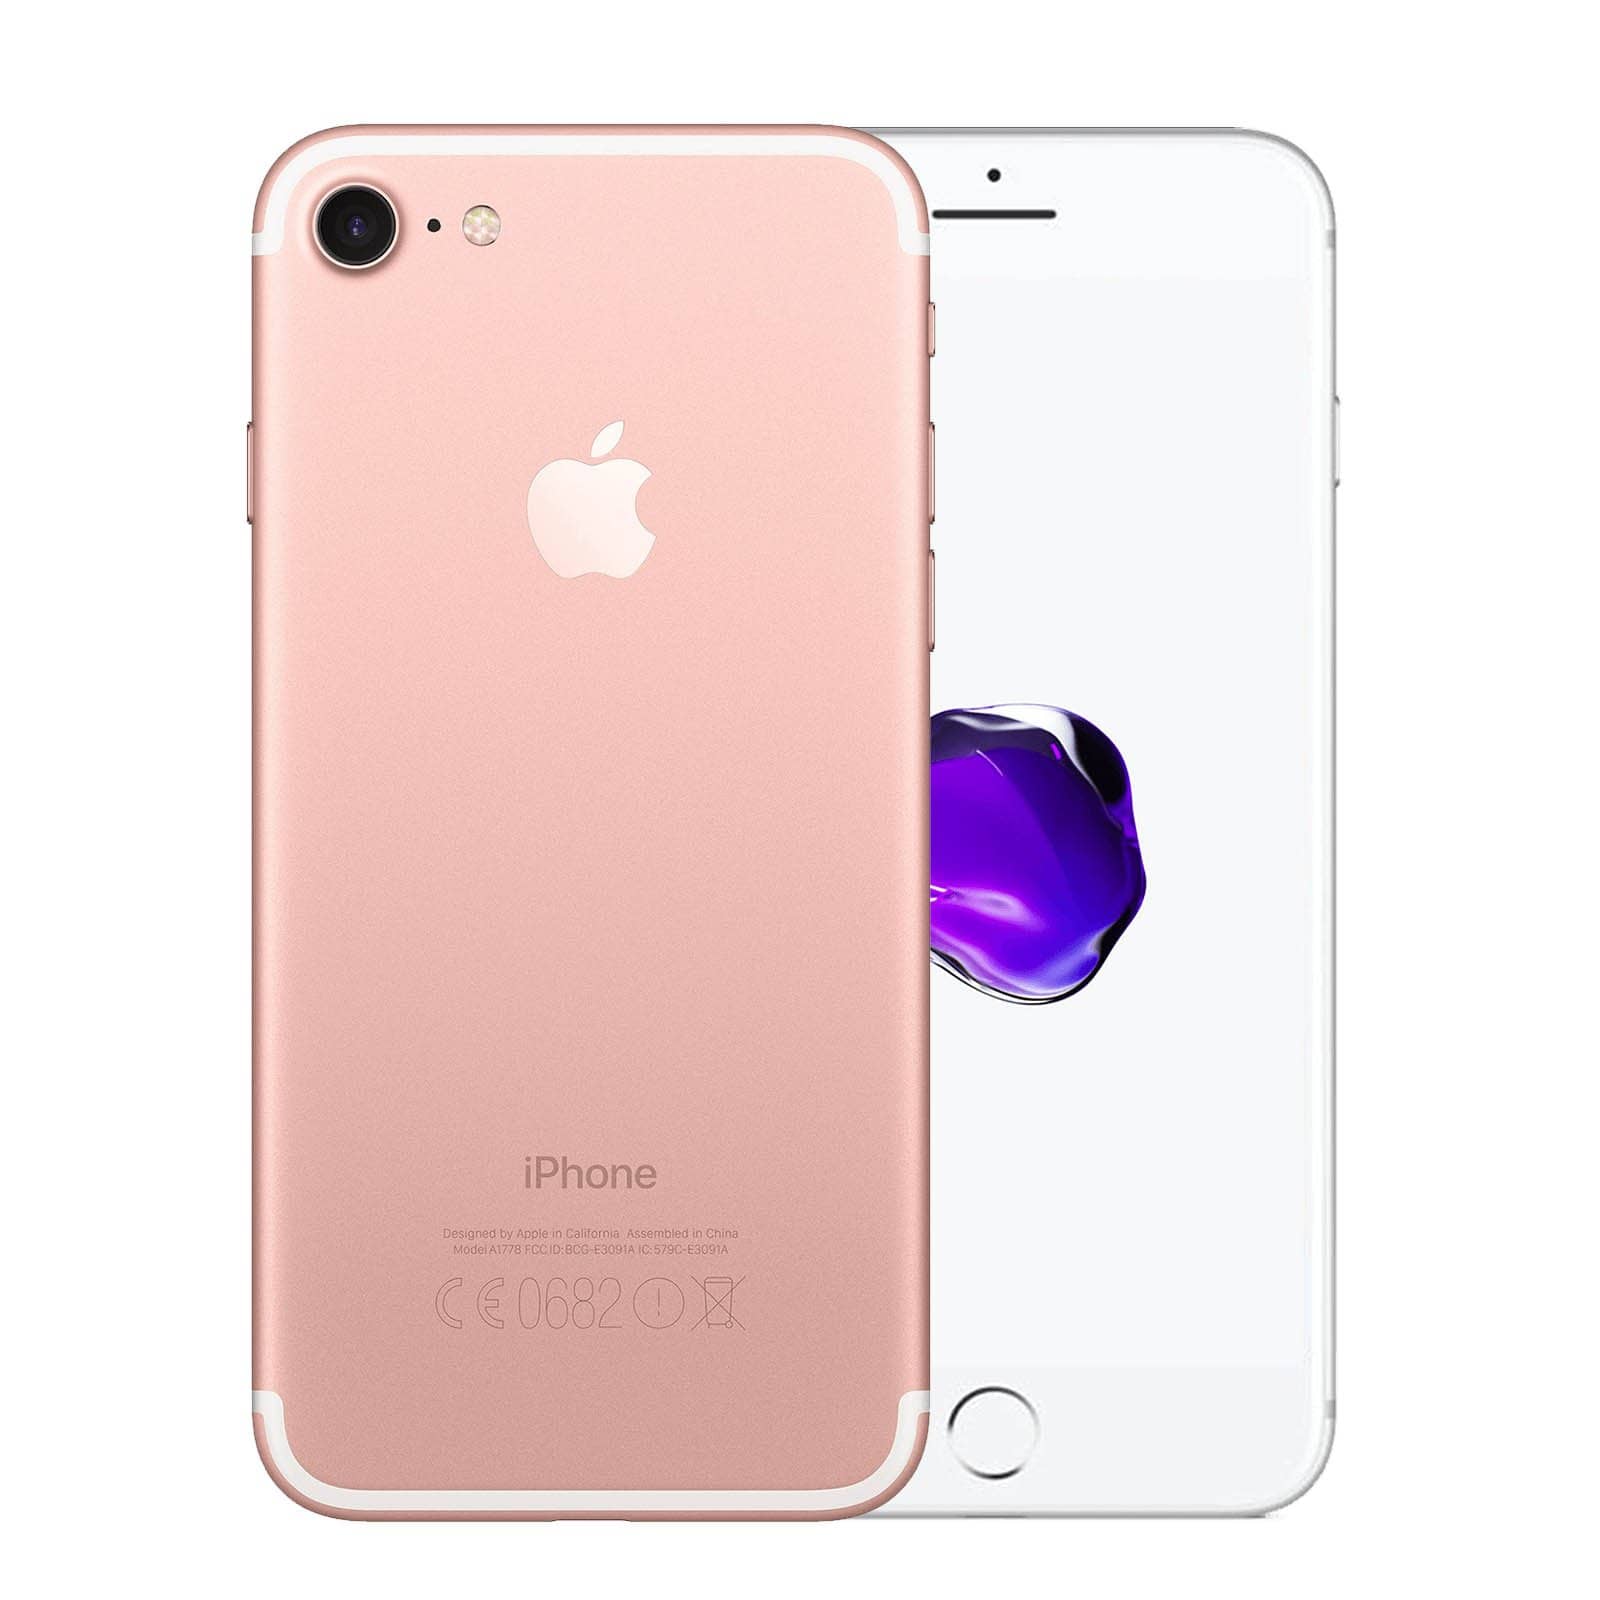 Apple iPhone 7 256GB Rose Gold Good - Unlocked 256GB Rose Gold Good